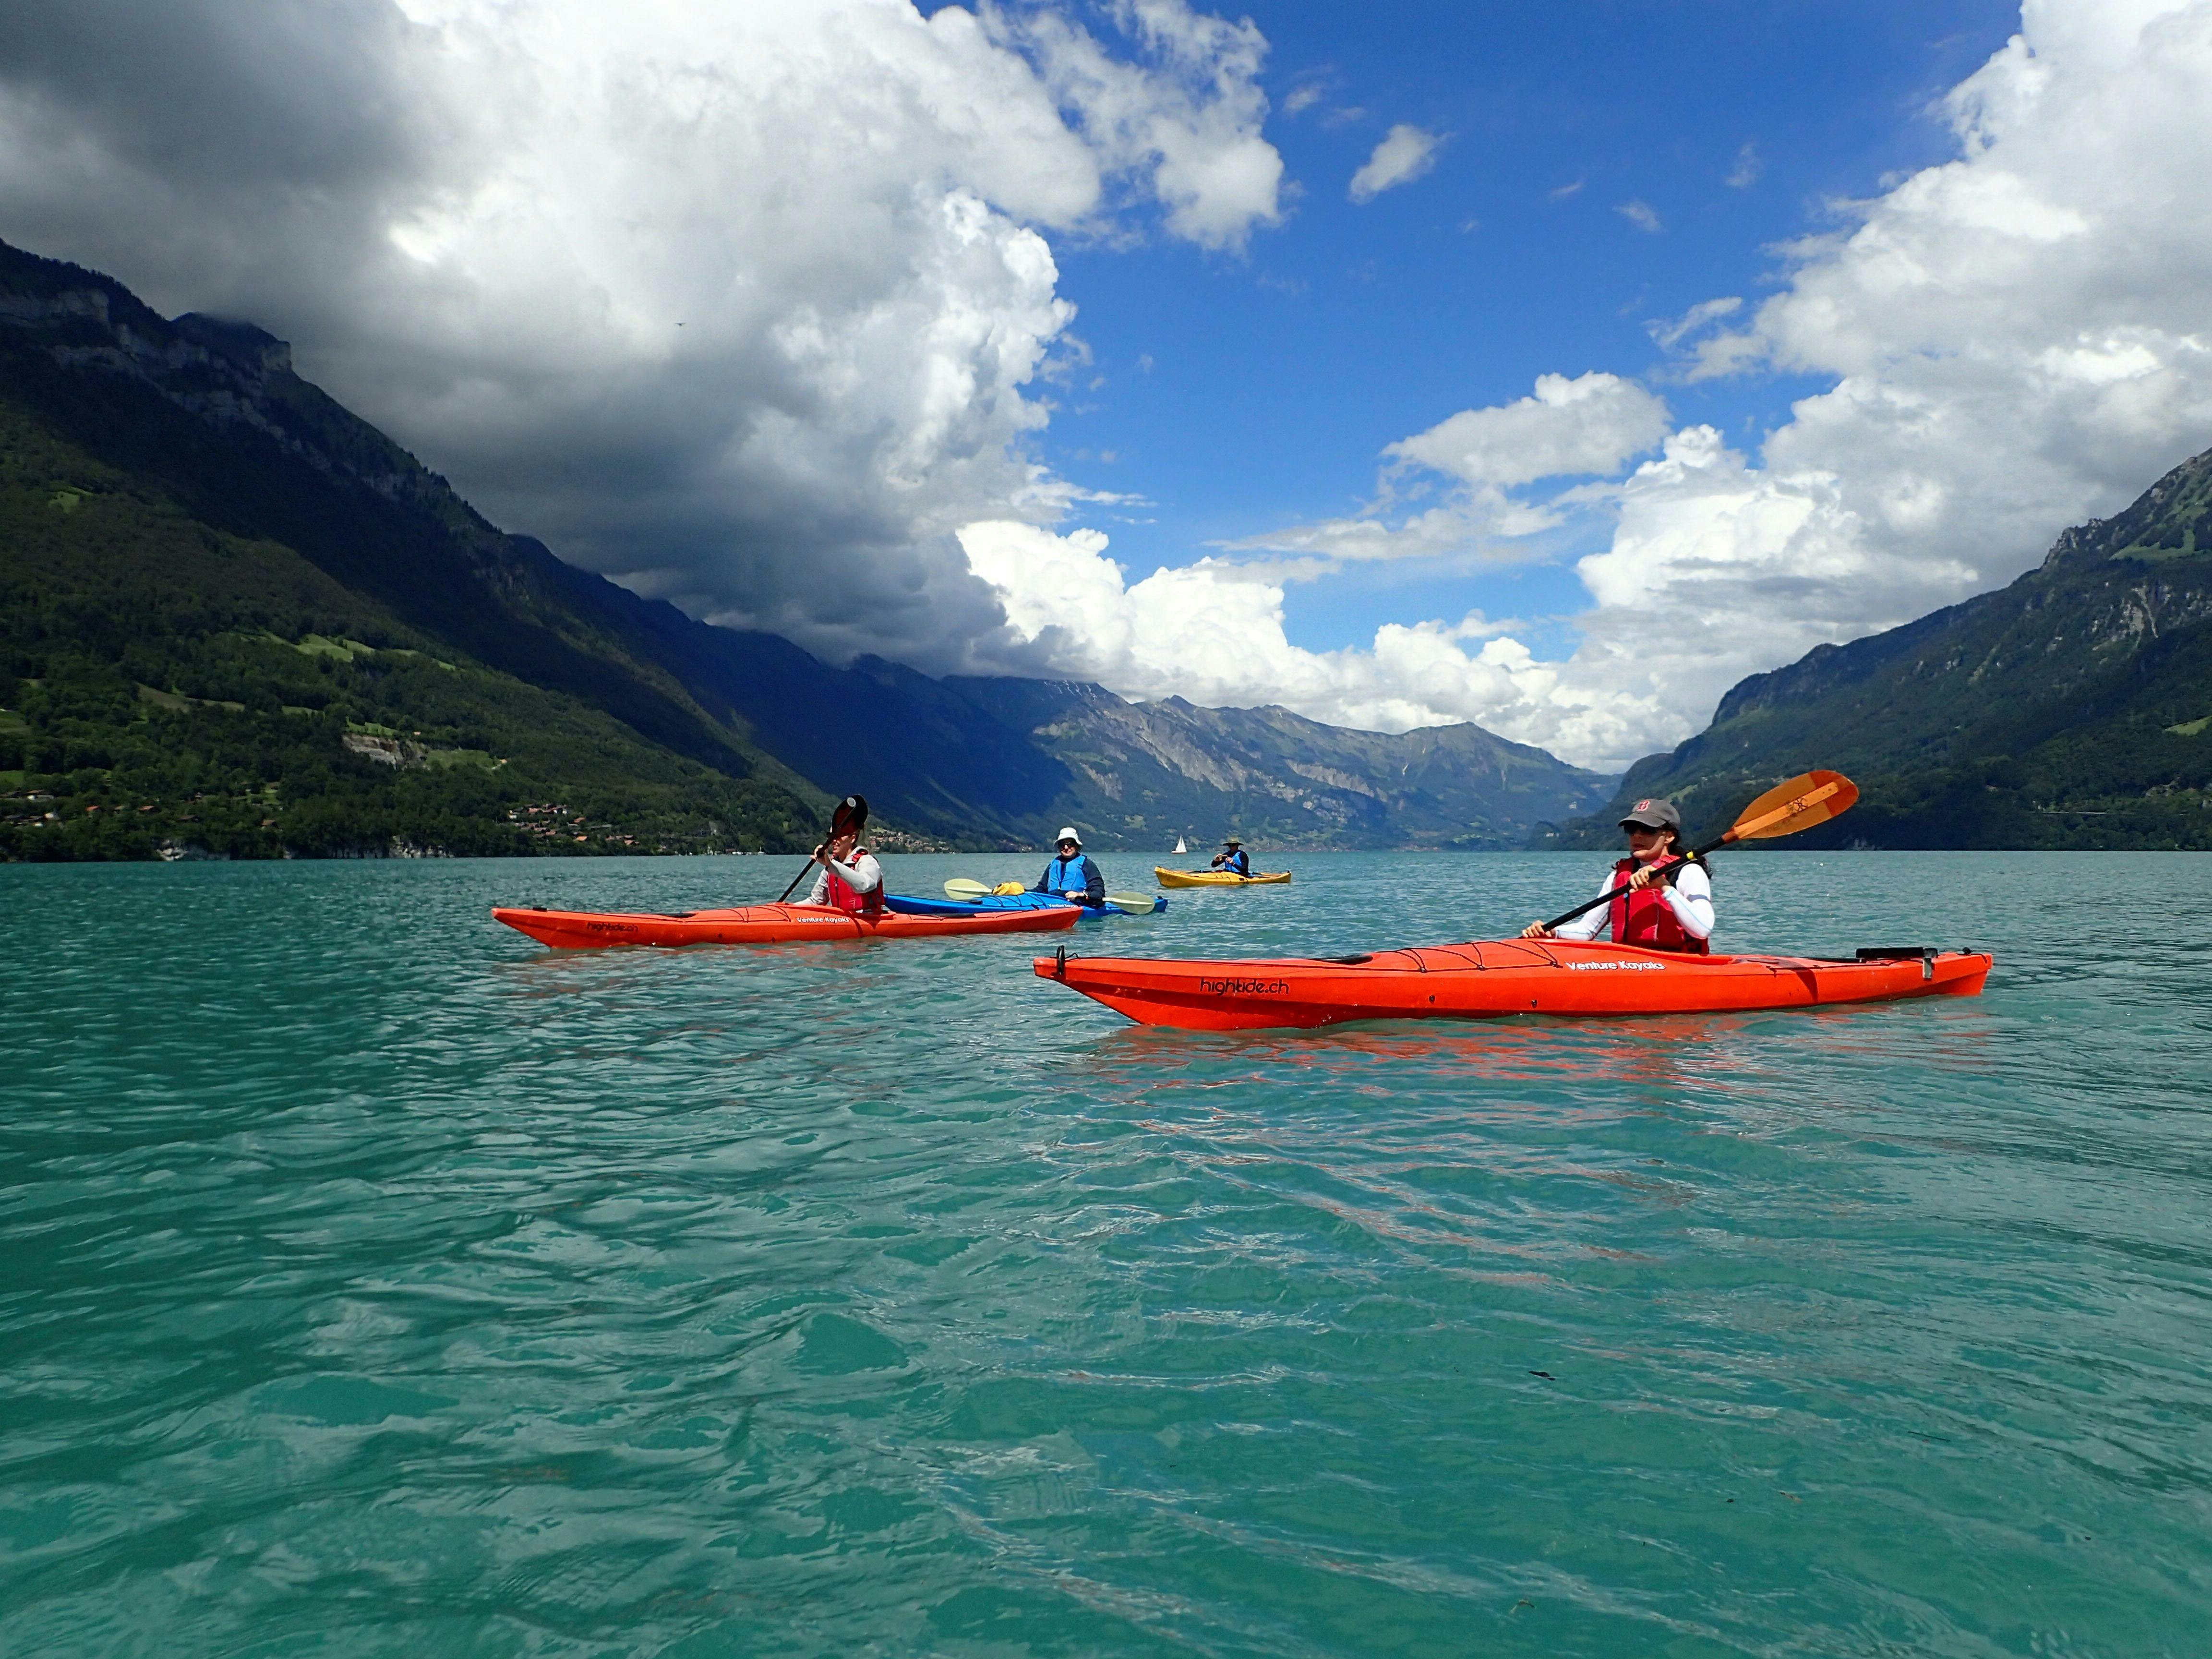 Half-day kayak tours on Lake Brienz